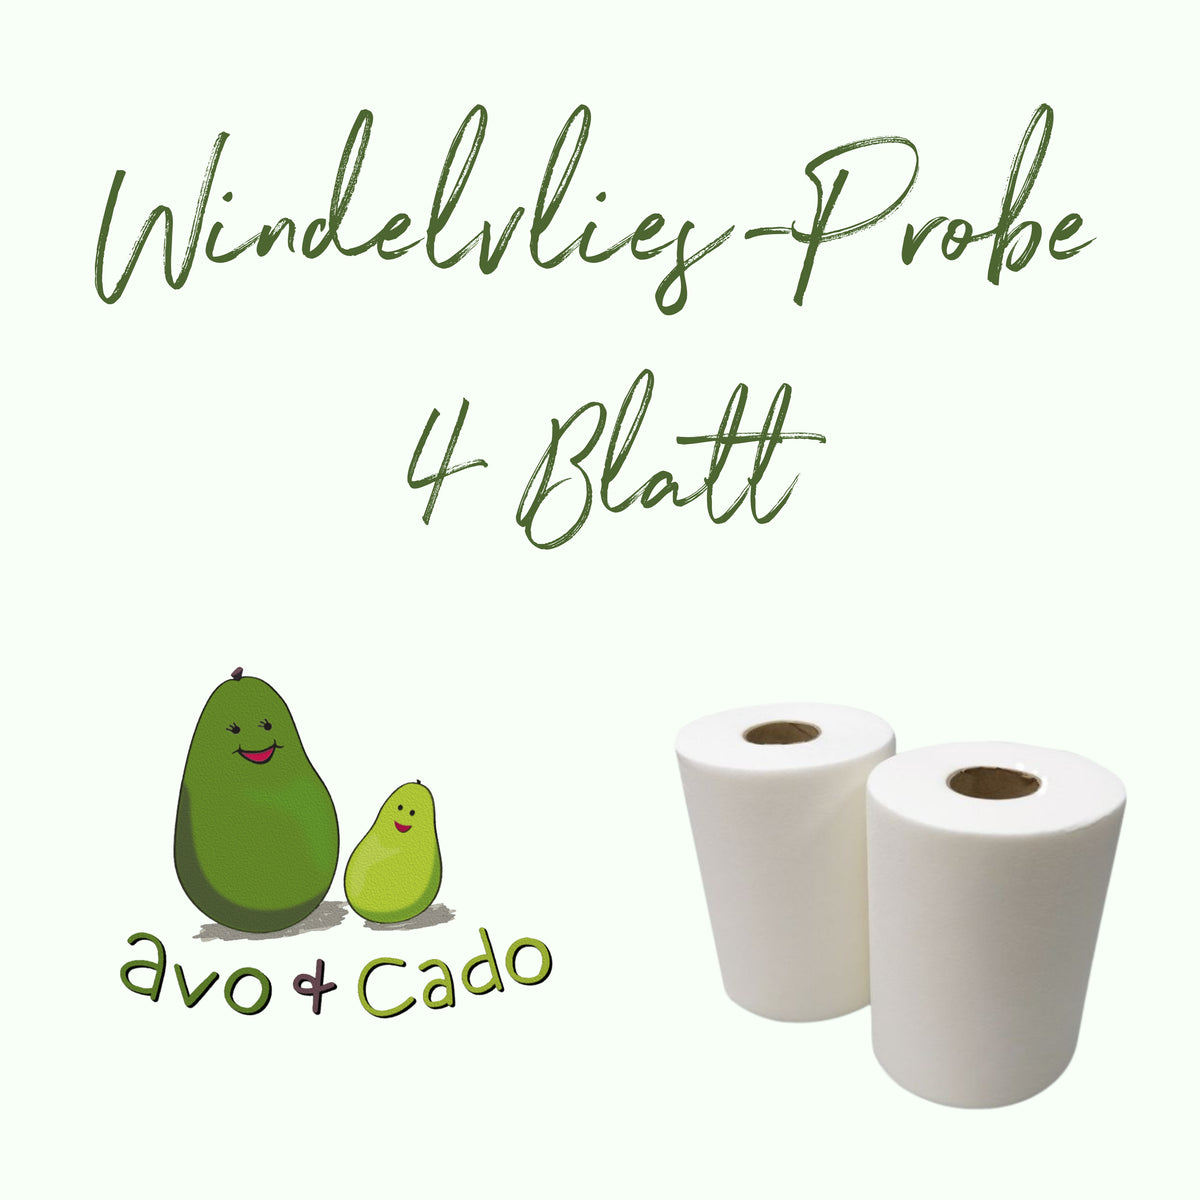 Avo&Cado Windelvlies Probe 4 Blatt